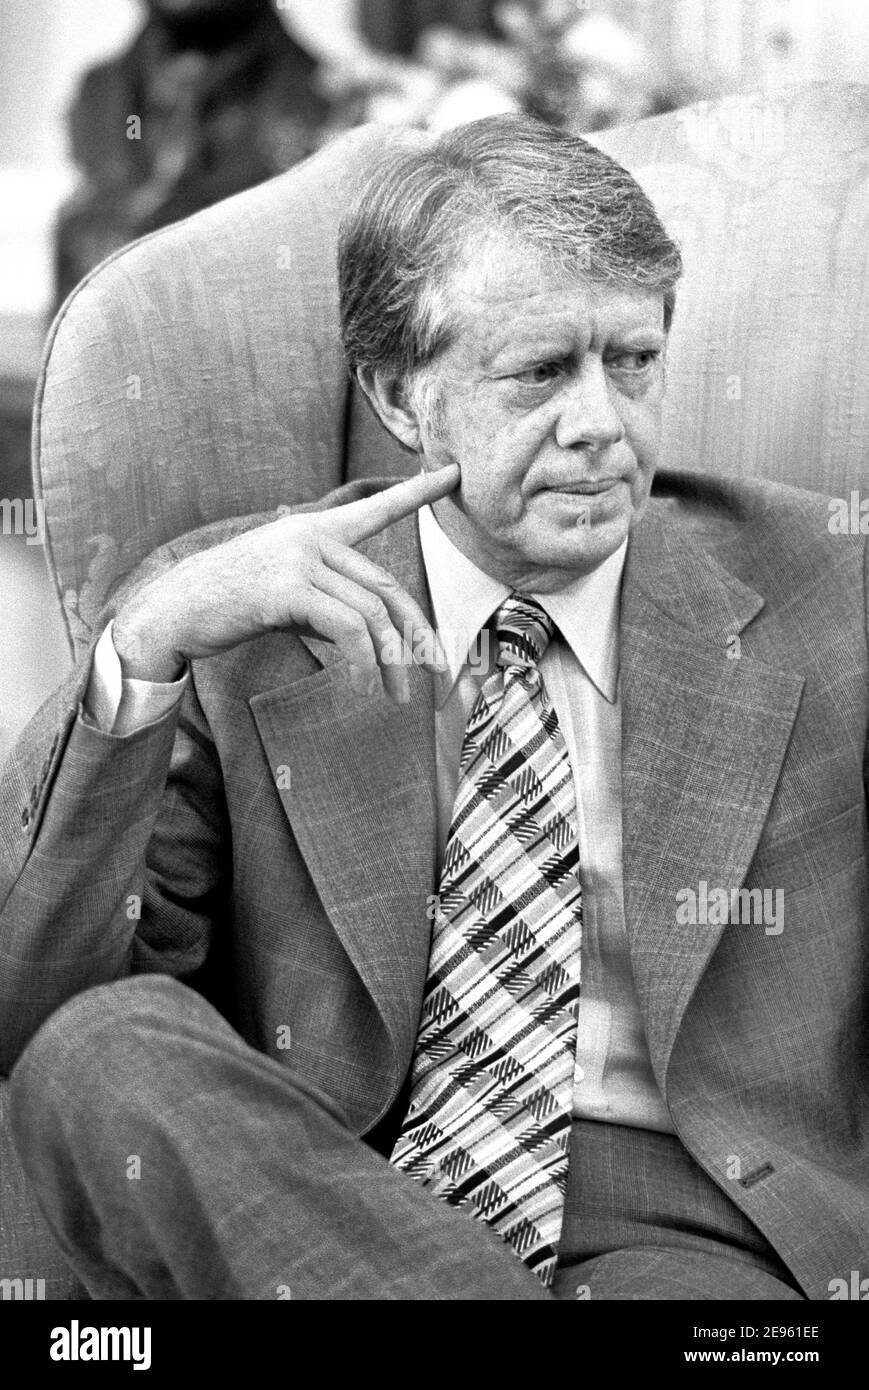 US-Präsident Jimmy Carter, sitzendes Porträt während des Interviews, White House, Washington, D.C., USA, Marion S. Trikosko, 24. Mai 1977 Stockfoto